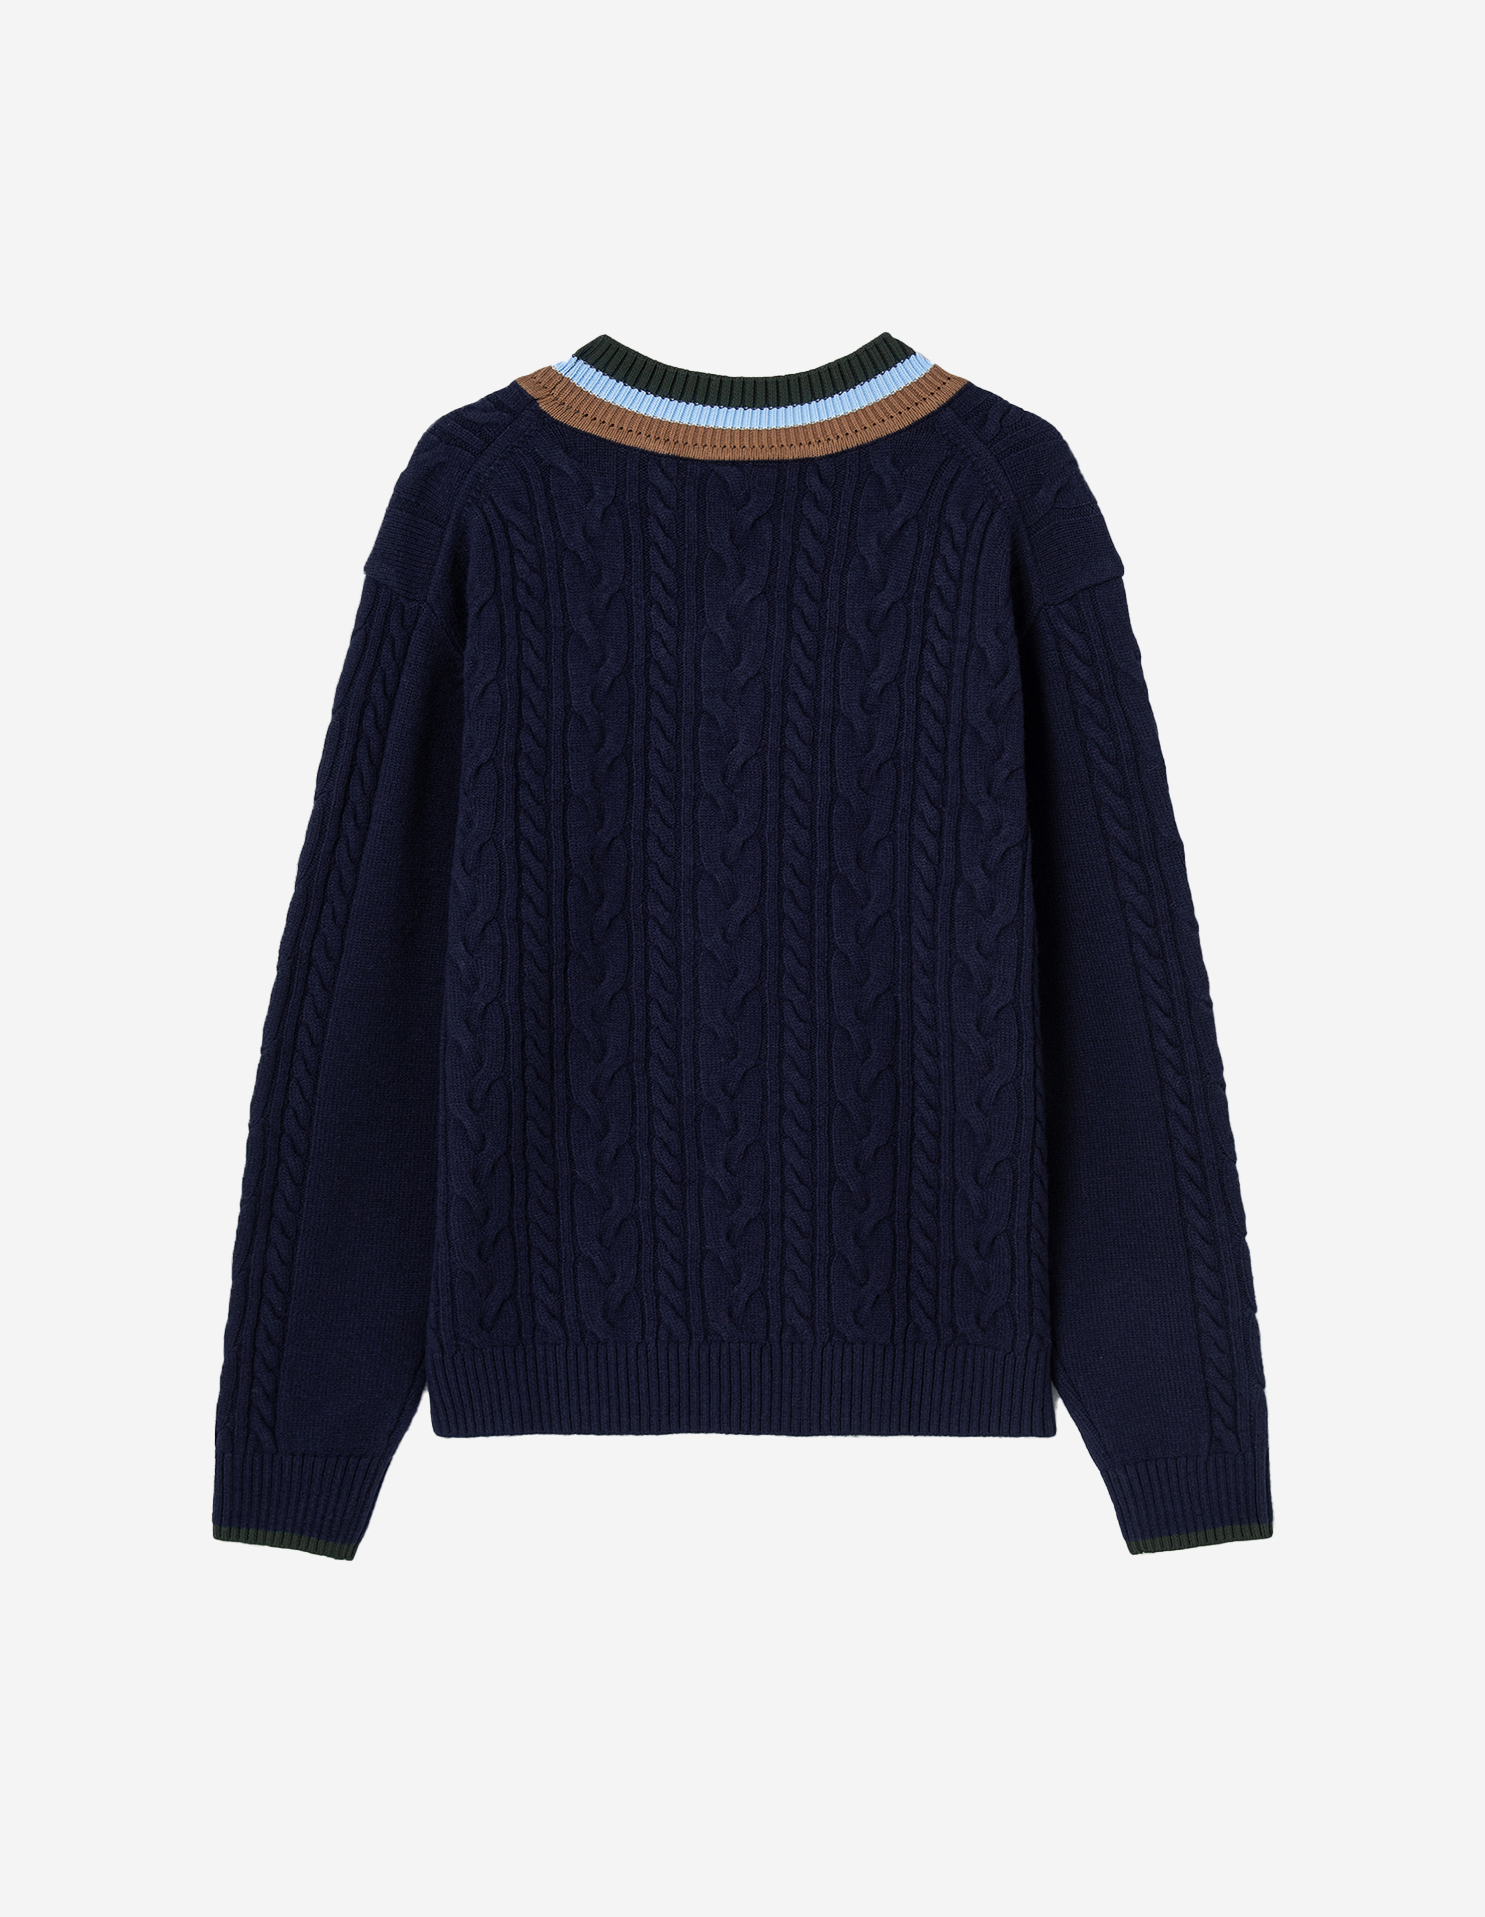 MAISONKITSUNEmaison kitsune knit sweater navy